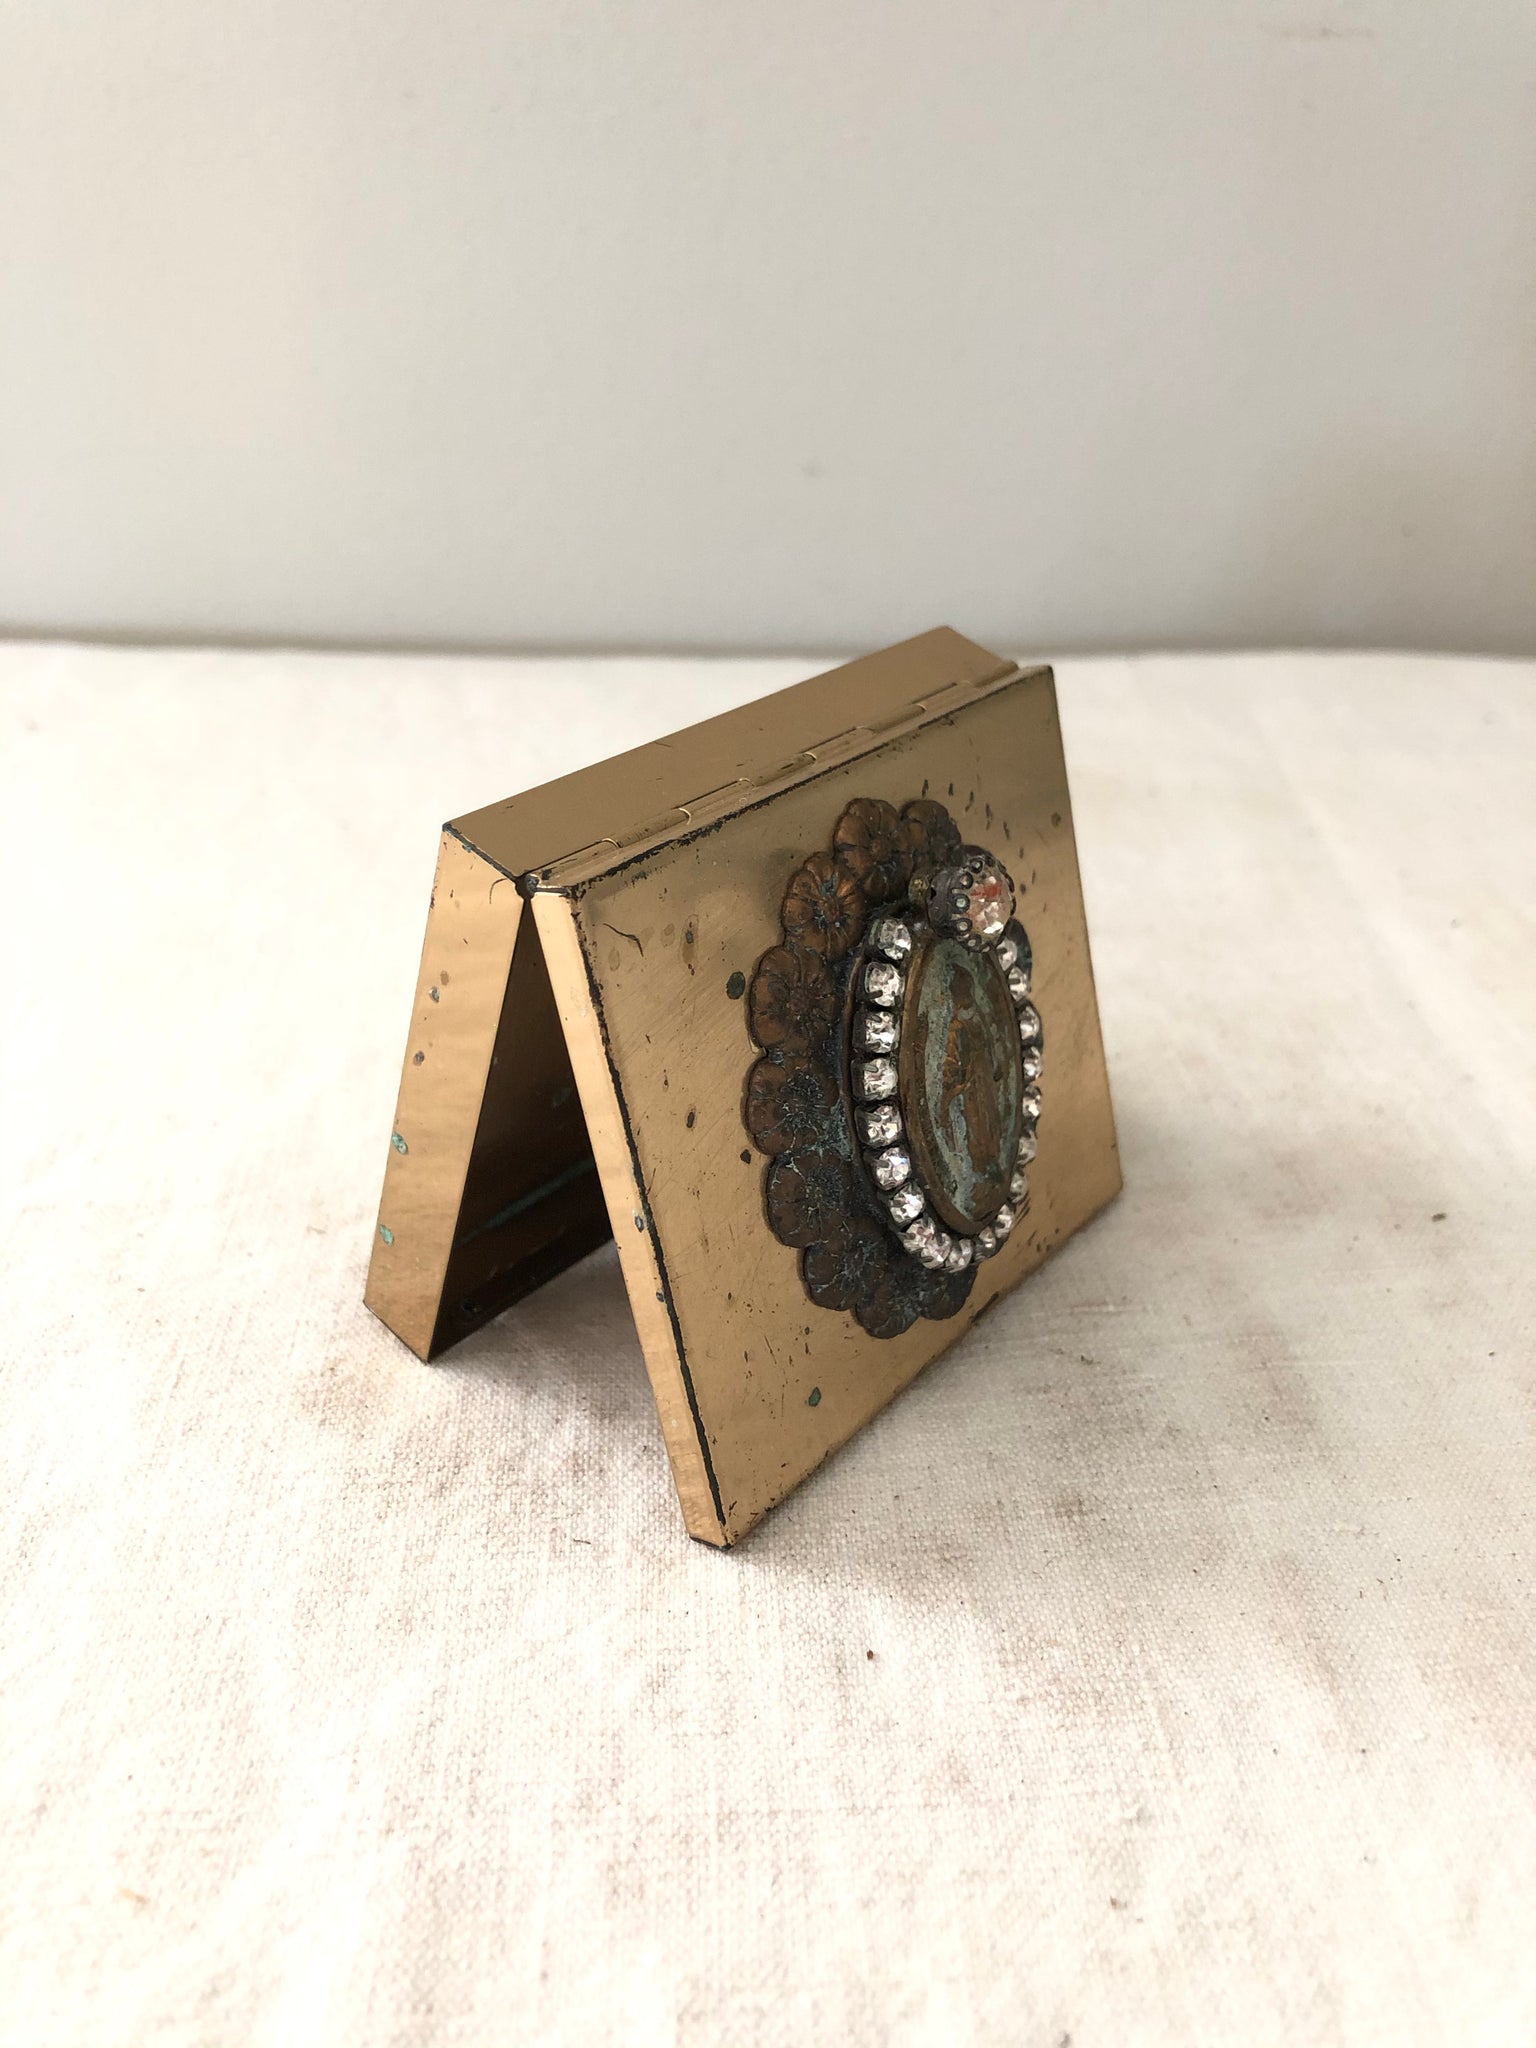 Small metal pill box virgin mary pendent,virgin mary charm piece